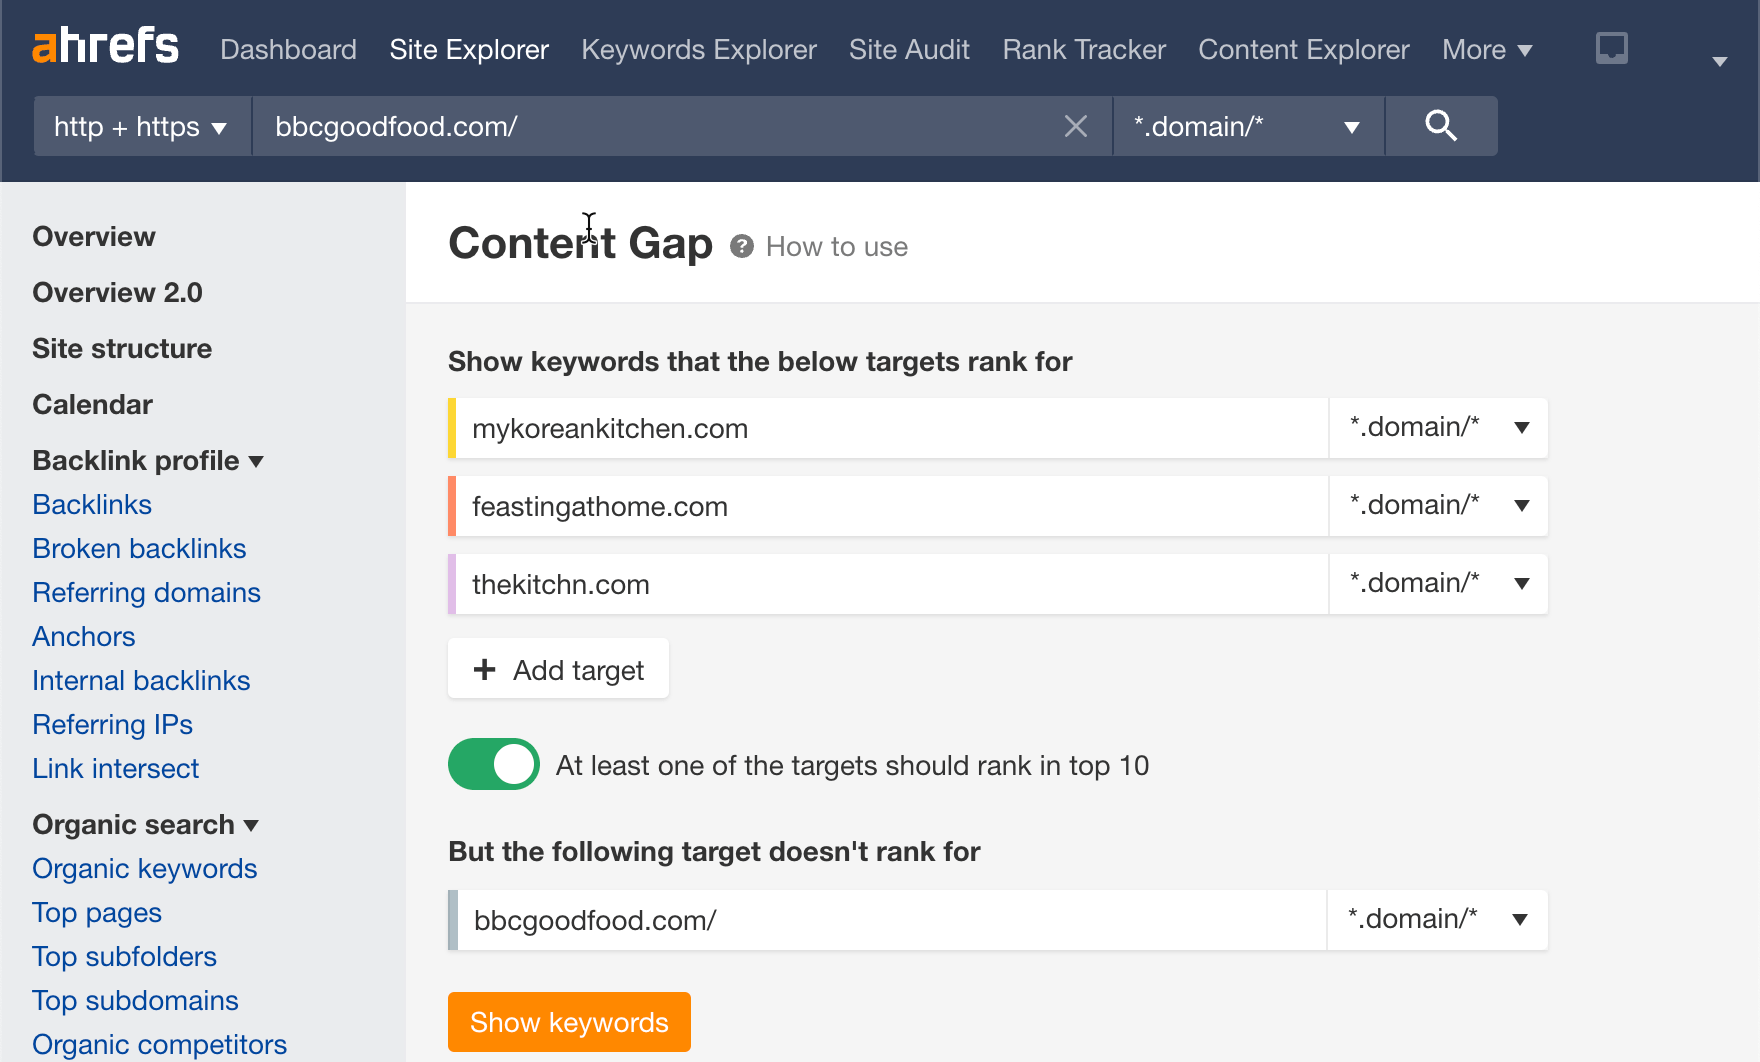 Content Gap tool, via Ahrefs' Site Explorer
